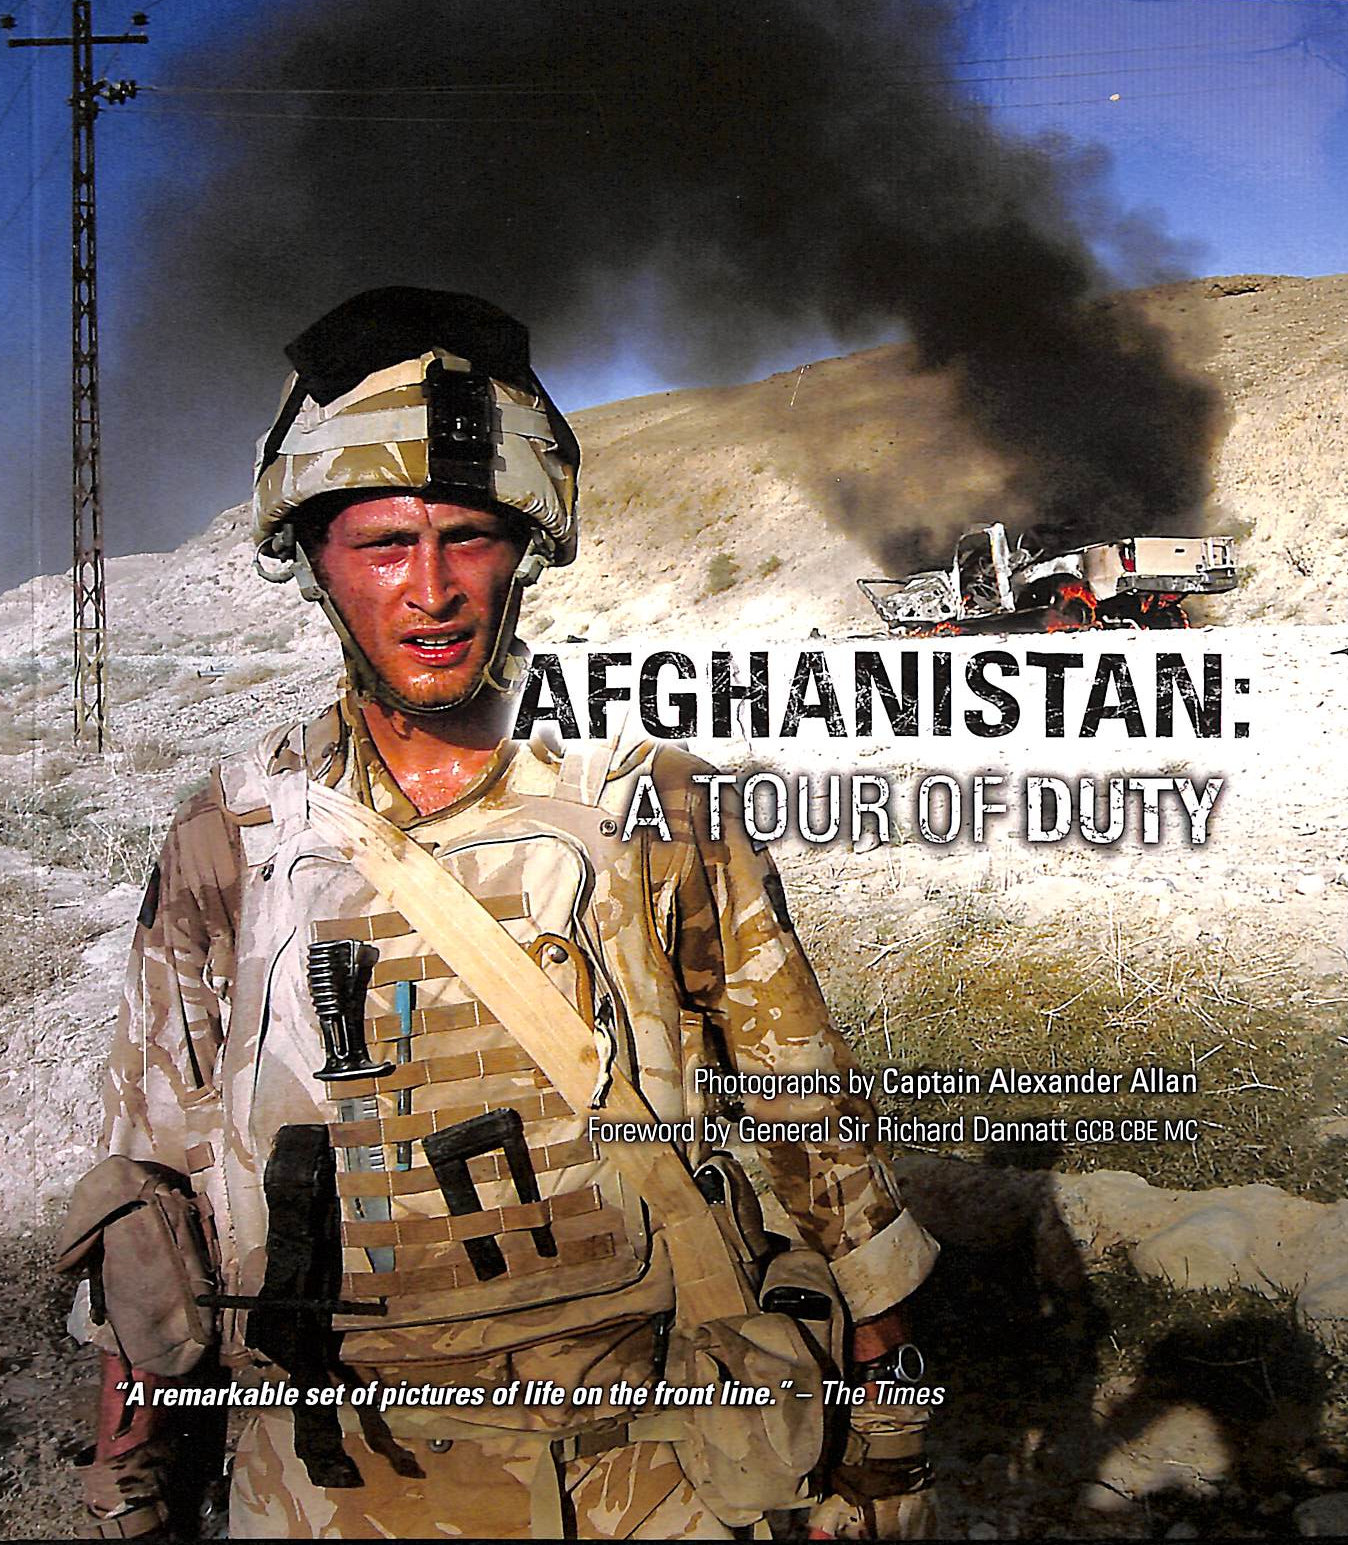 ALEXANDER ALLAN - Afghanistan: A Tour of Duty